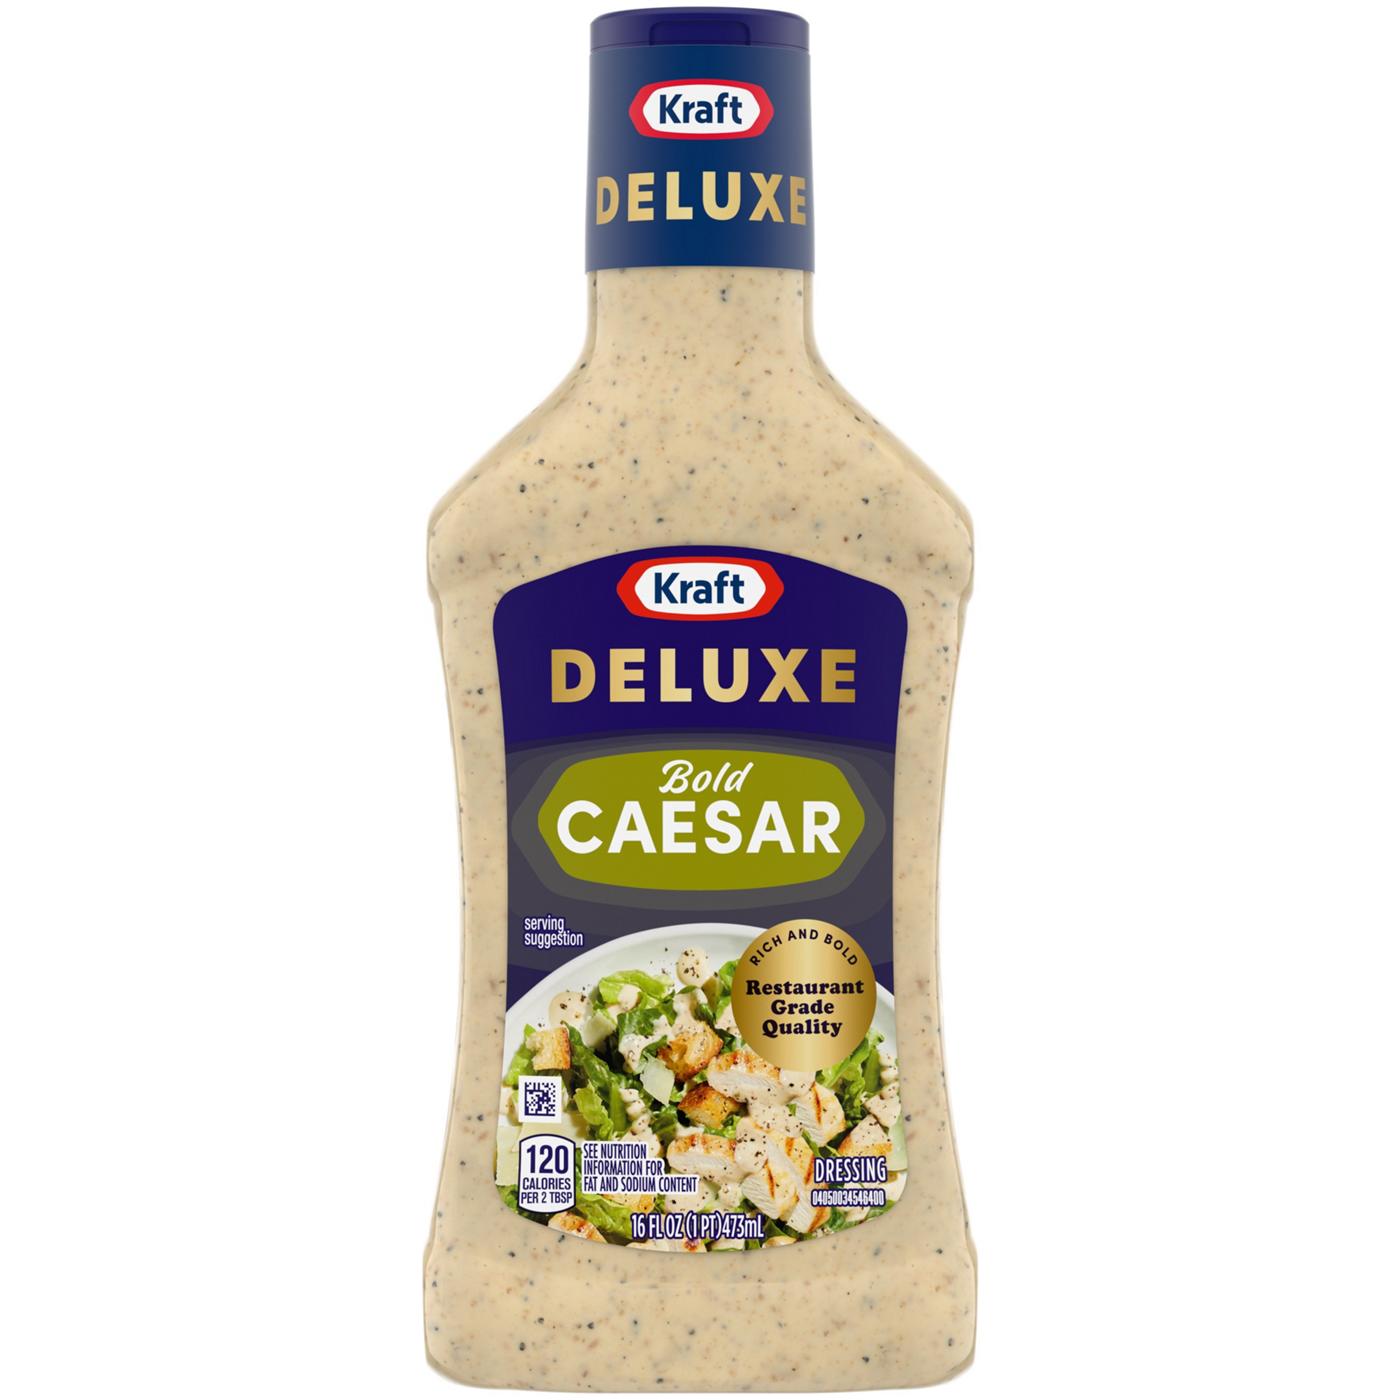 Kraft Deluxe Salad Dressing - Bold Caesar; image 1 of 2